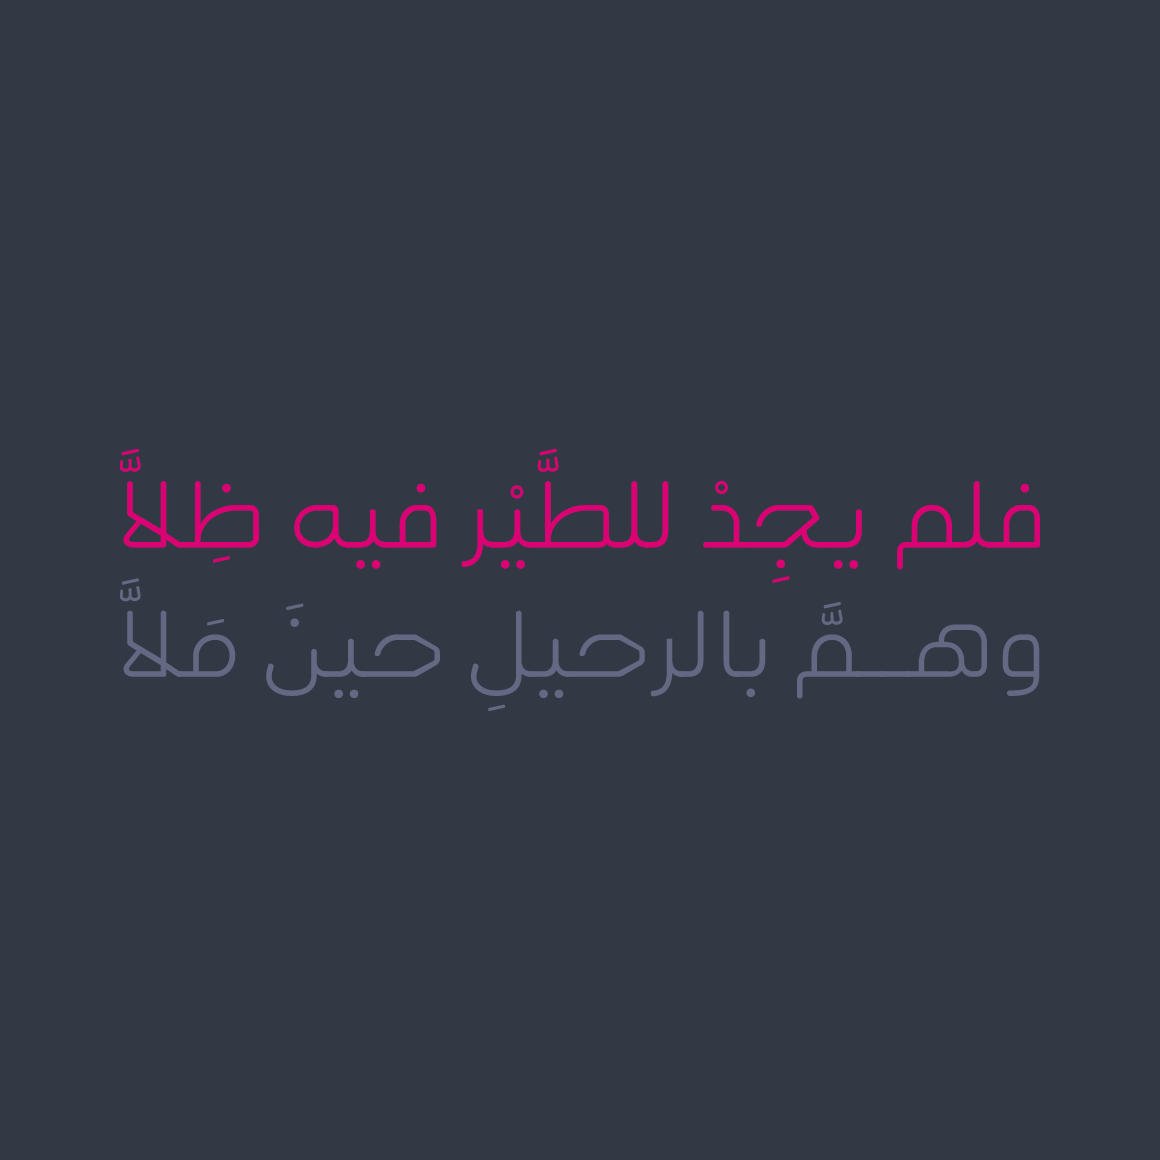 Ahlan - Arabic Typeface for your ideas.